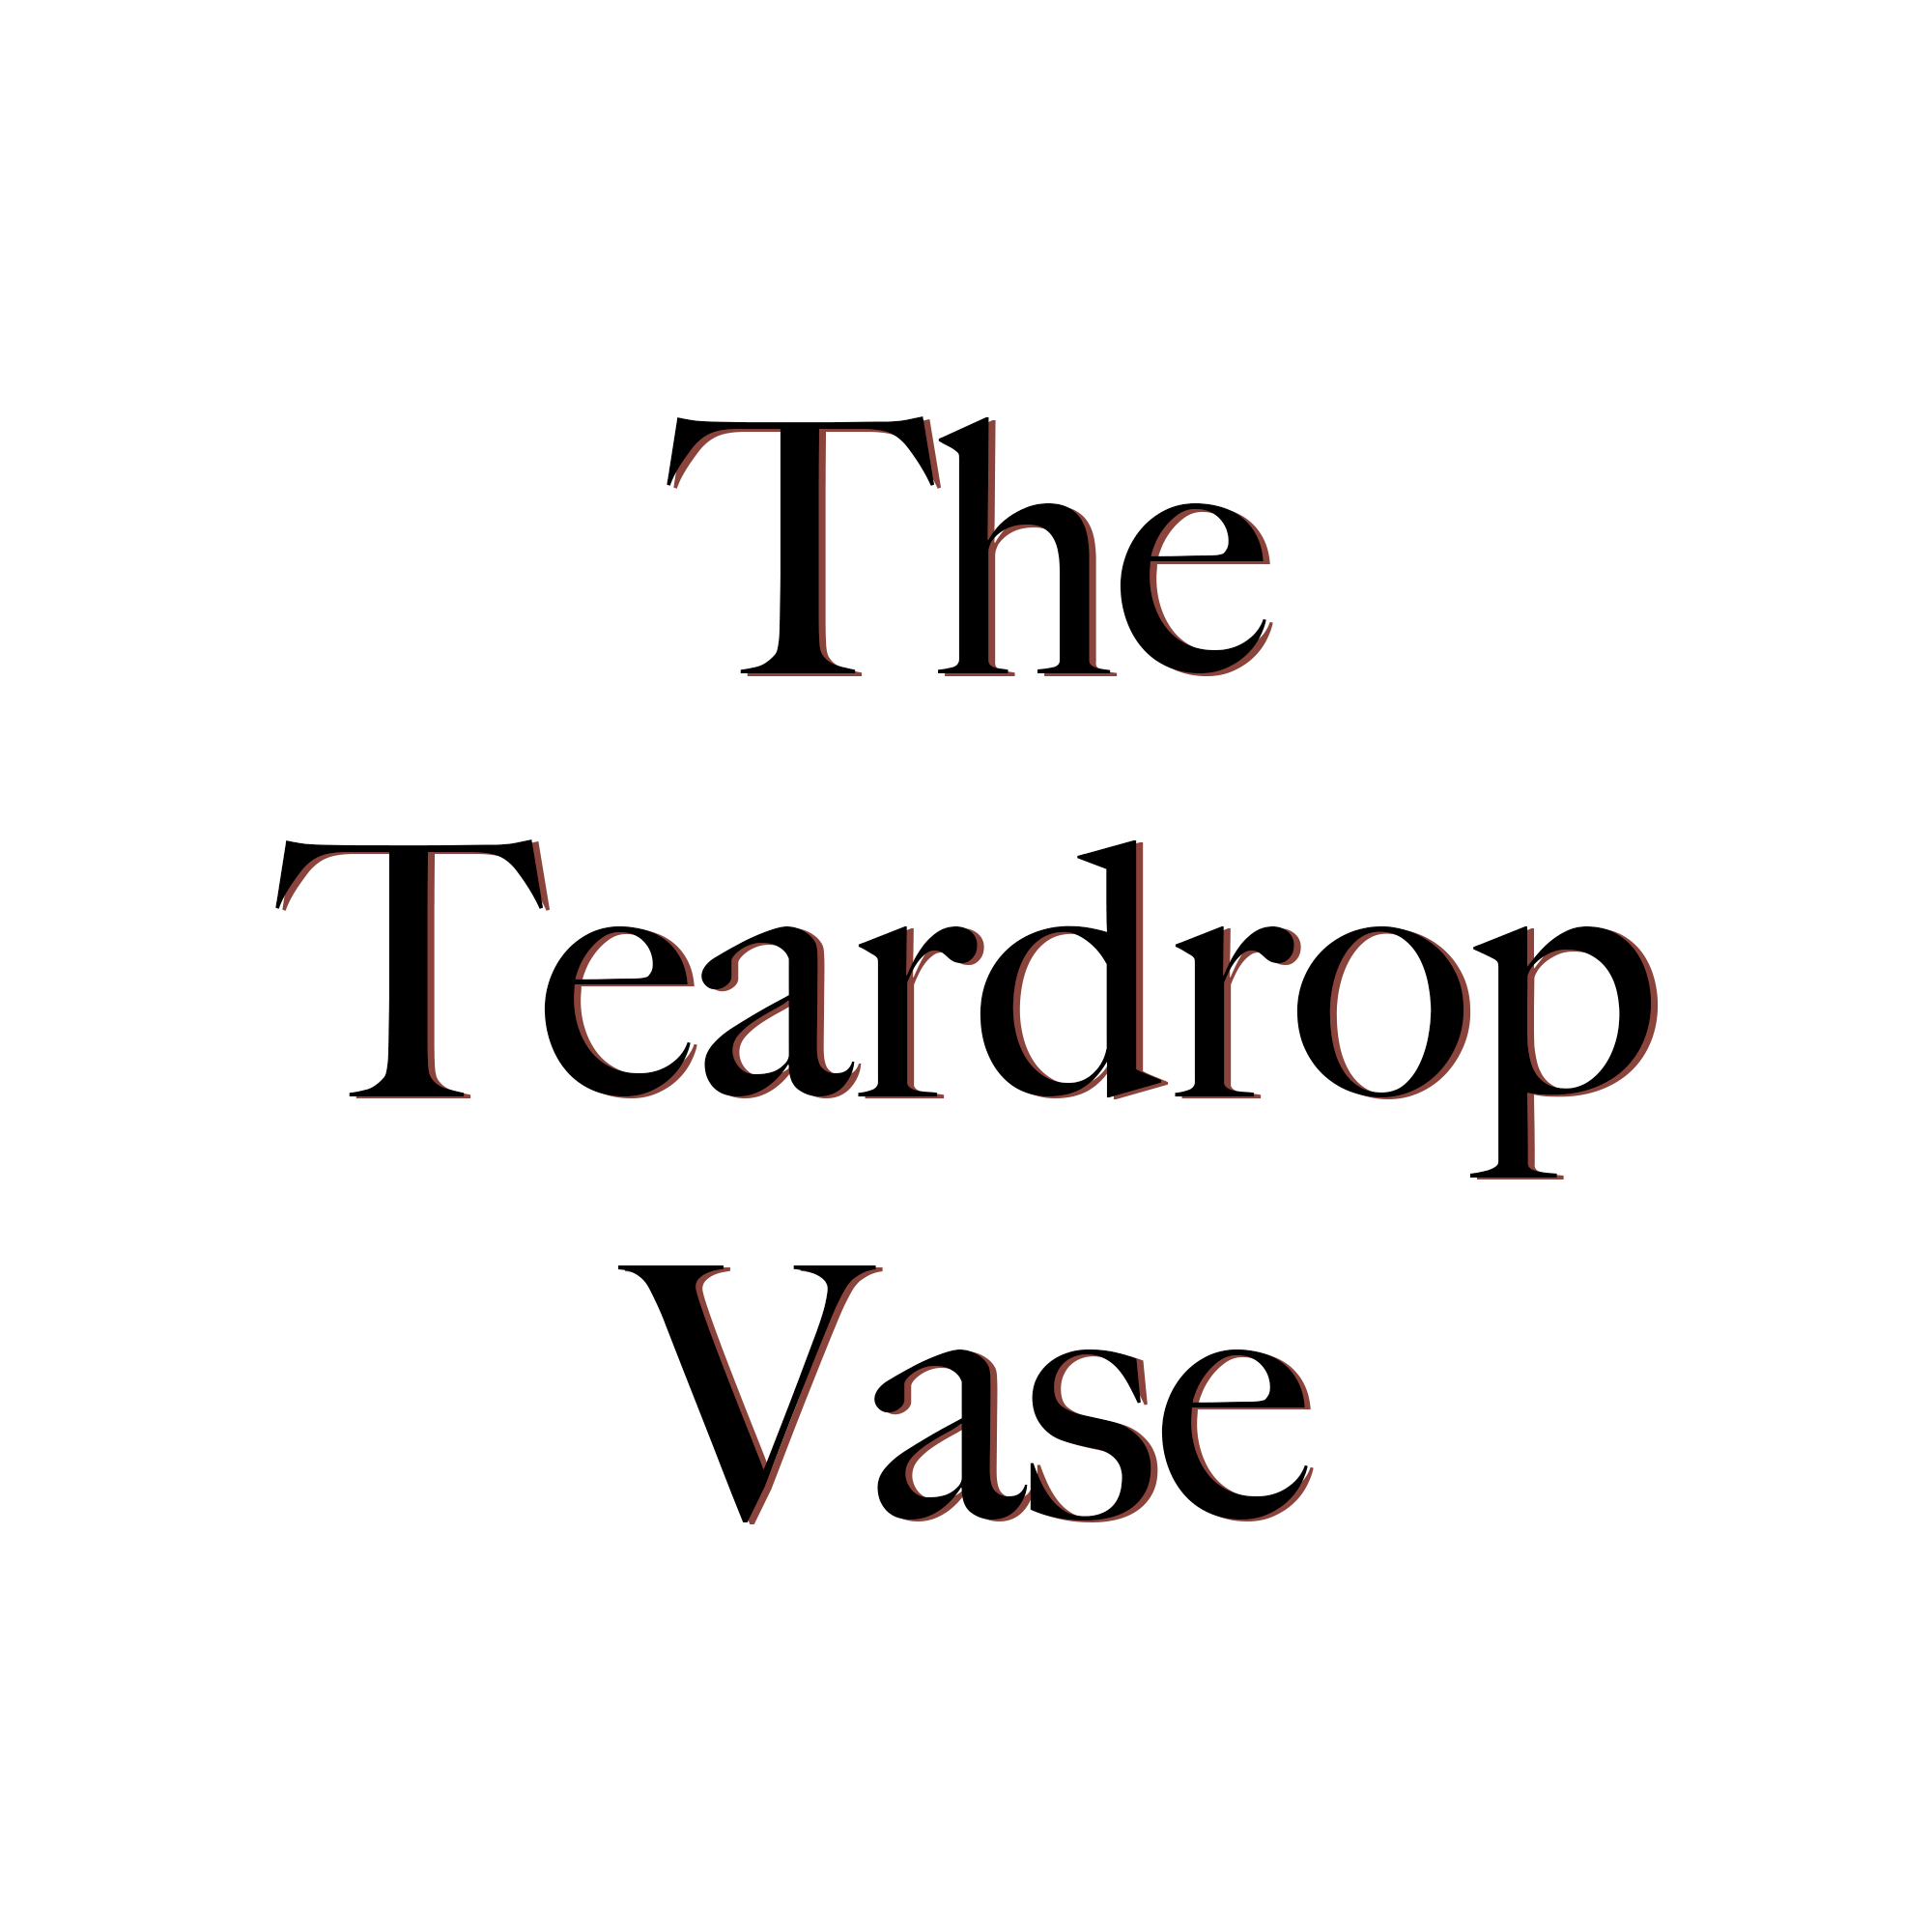 The Teardrop Vase